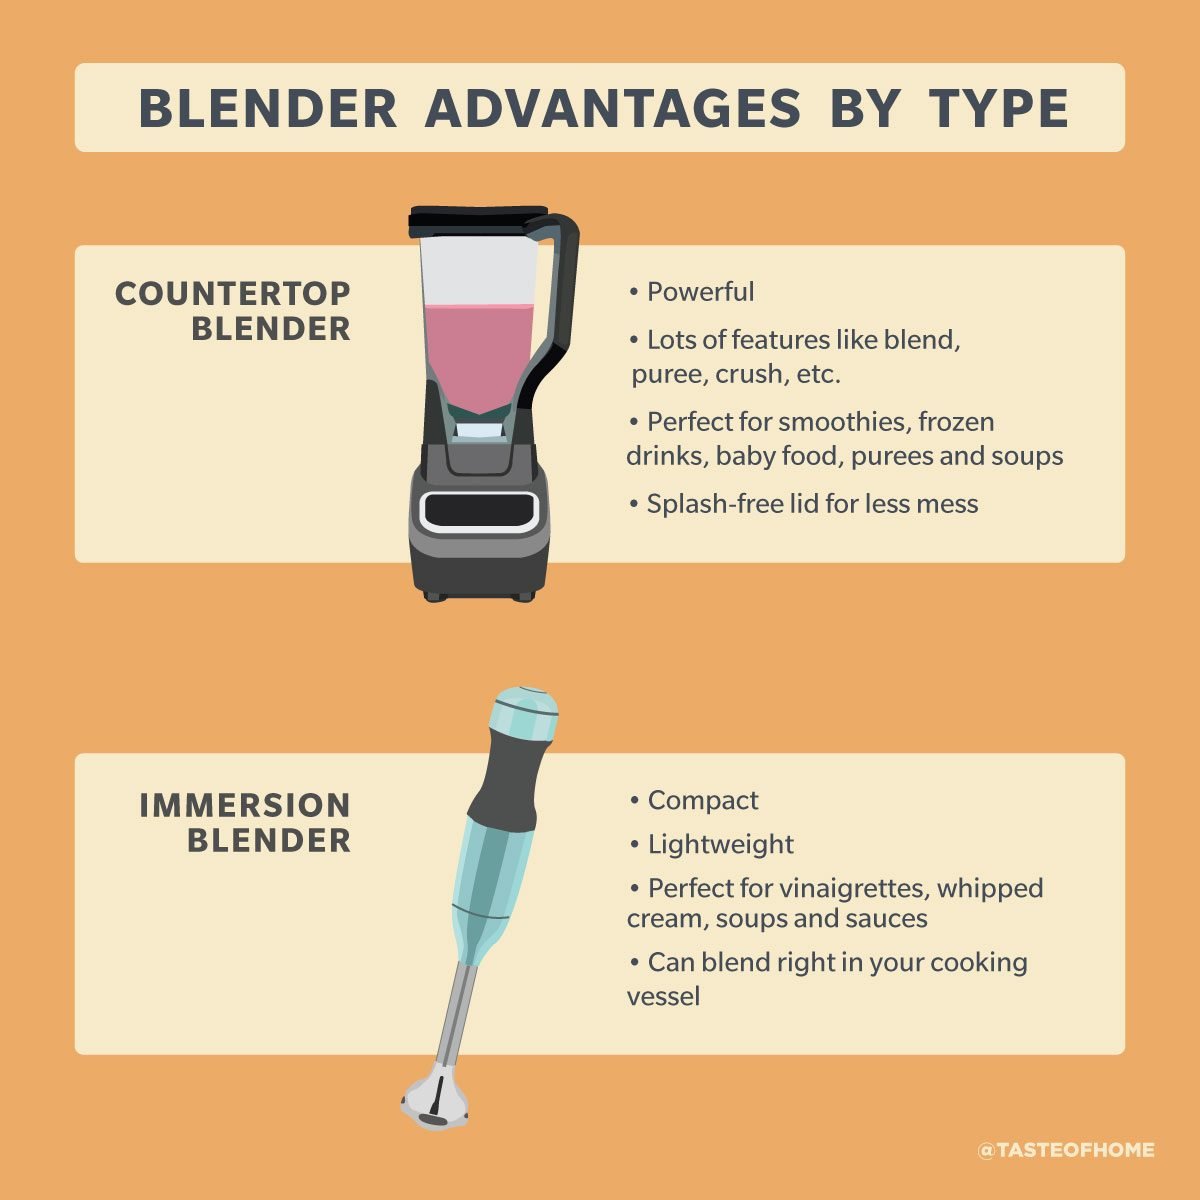 Immersion Blender vs. Blender: How to Choose the Right Type for You